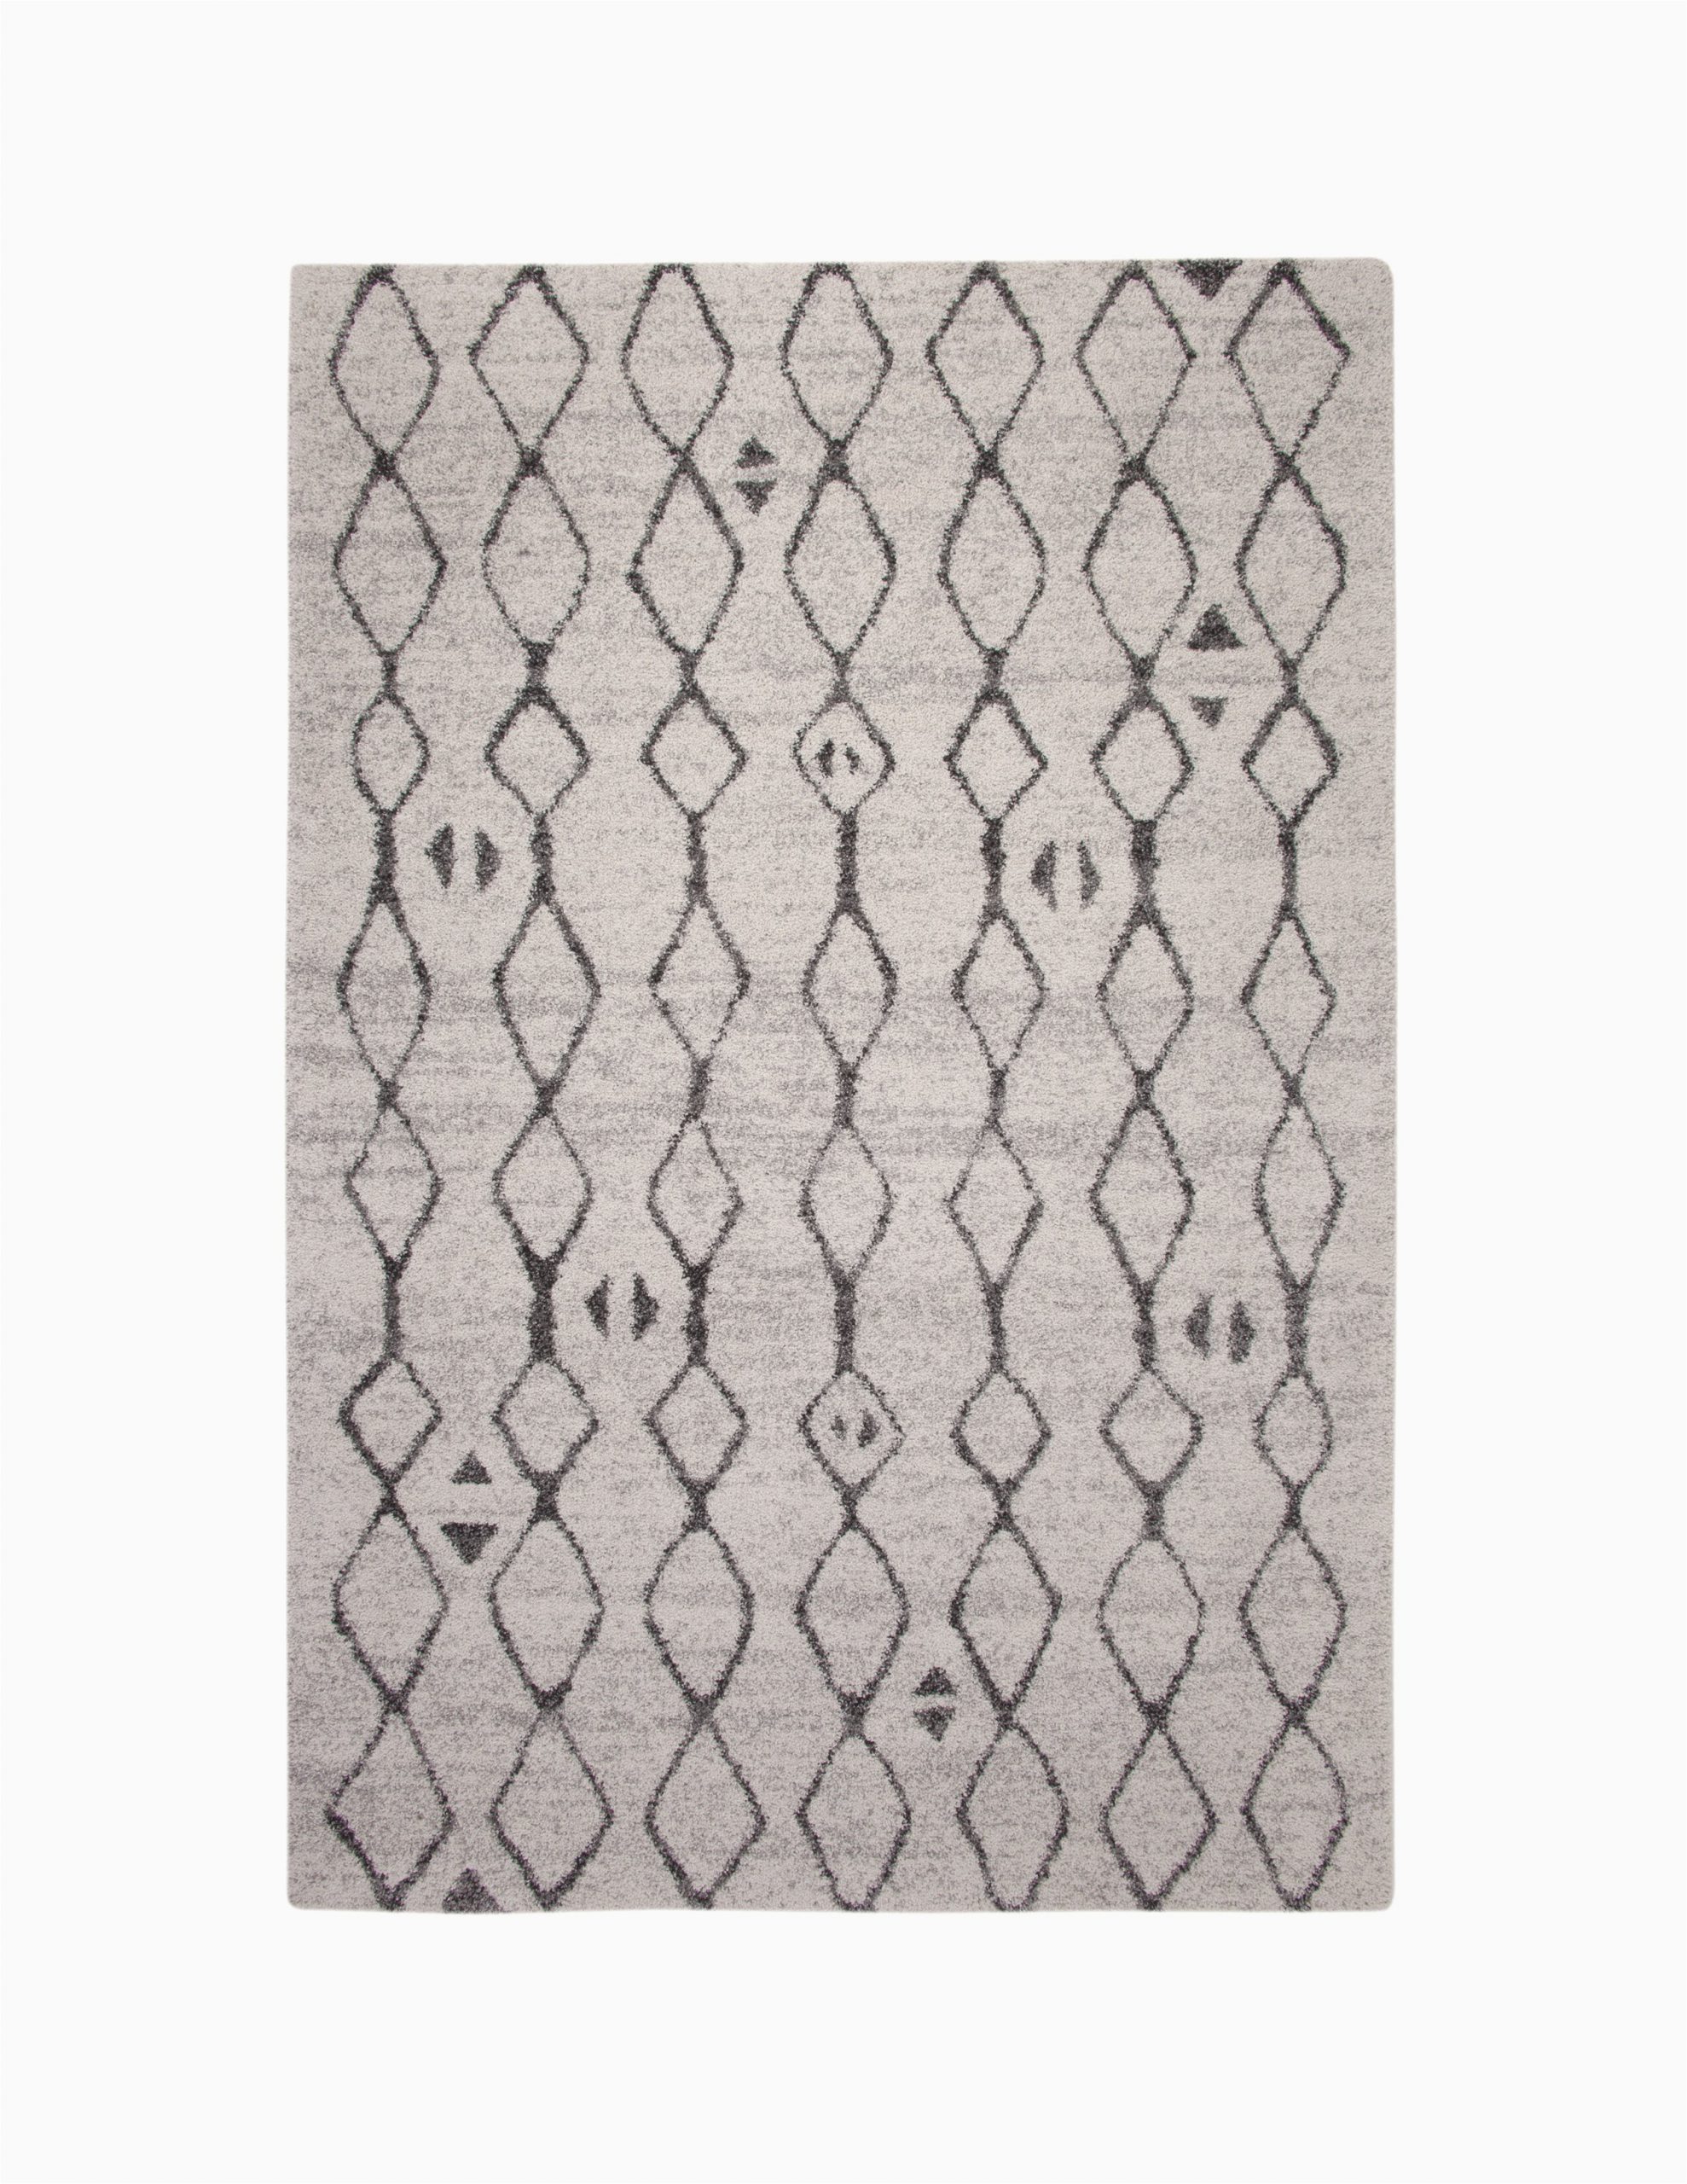 adamsburg geometric ivorycharcoal area rug